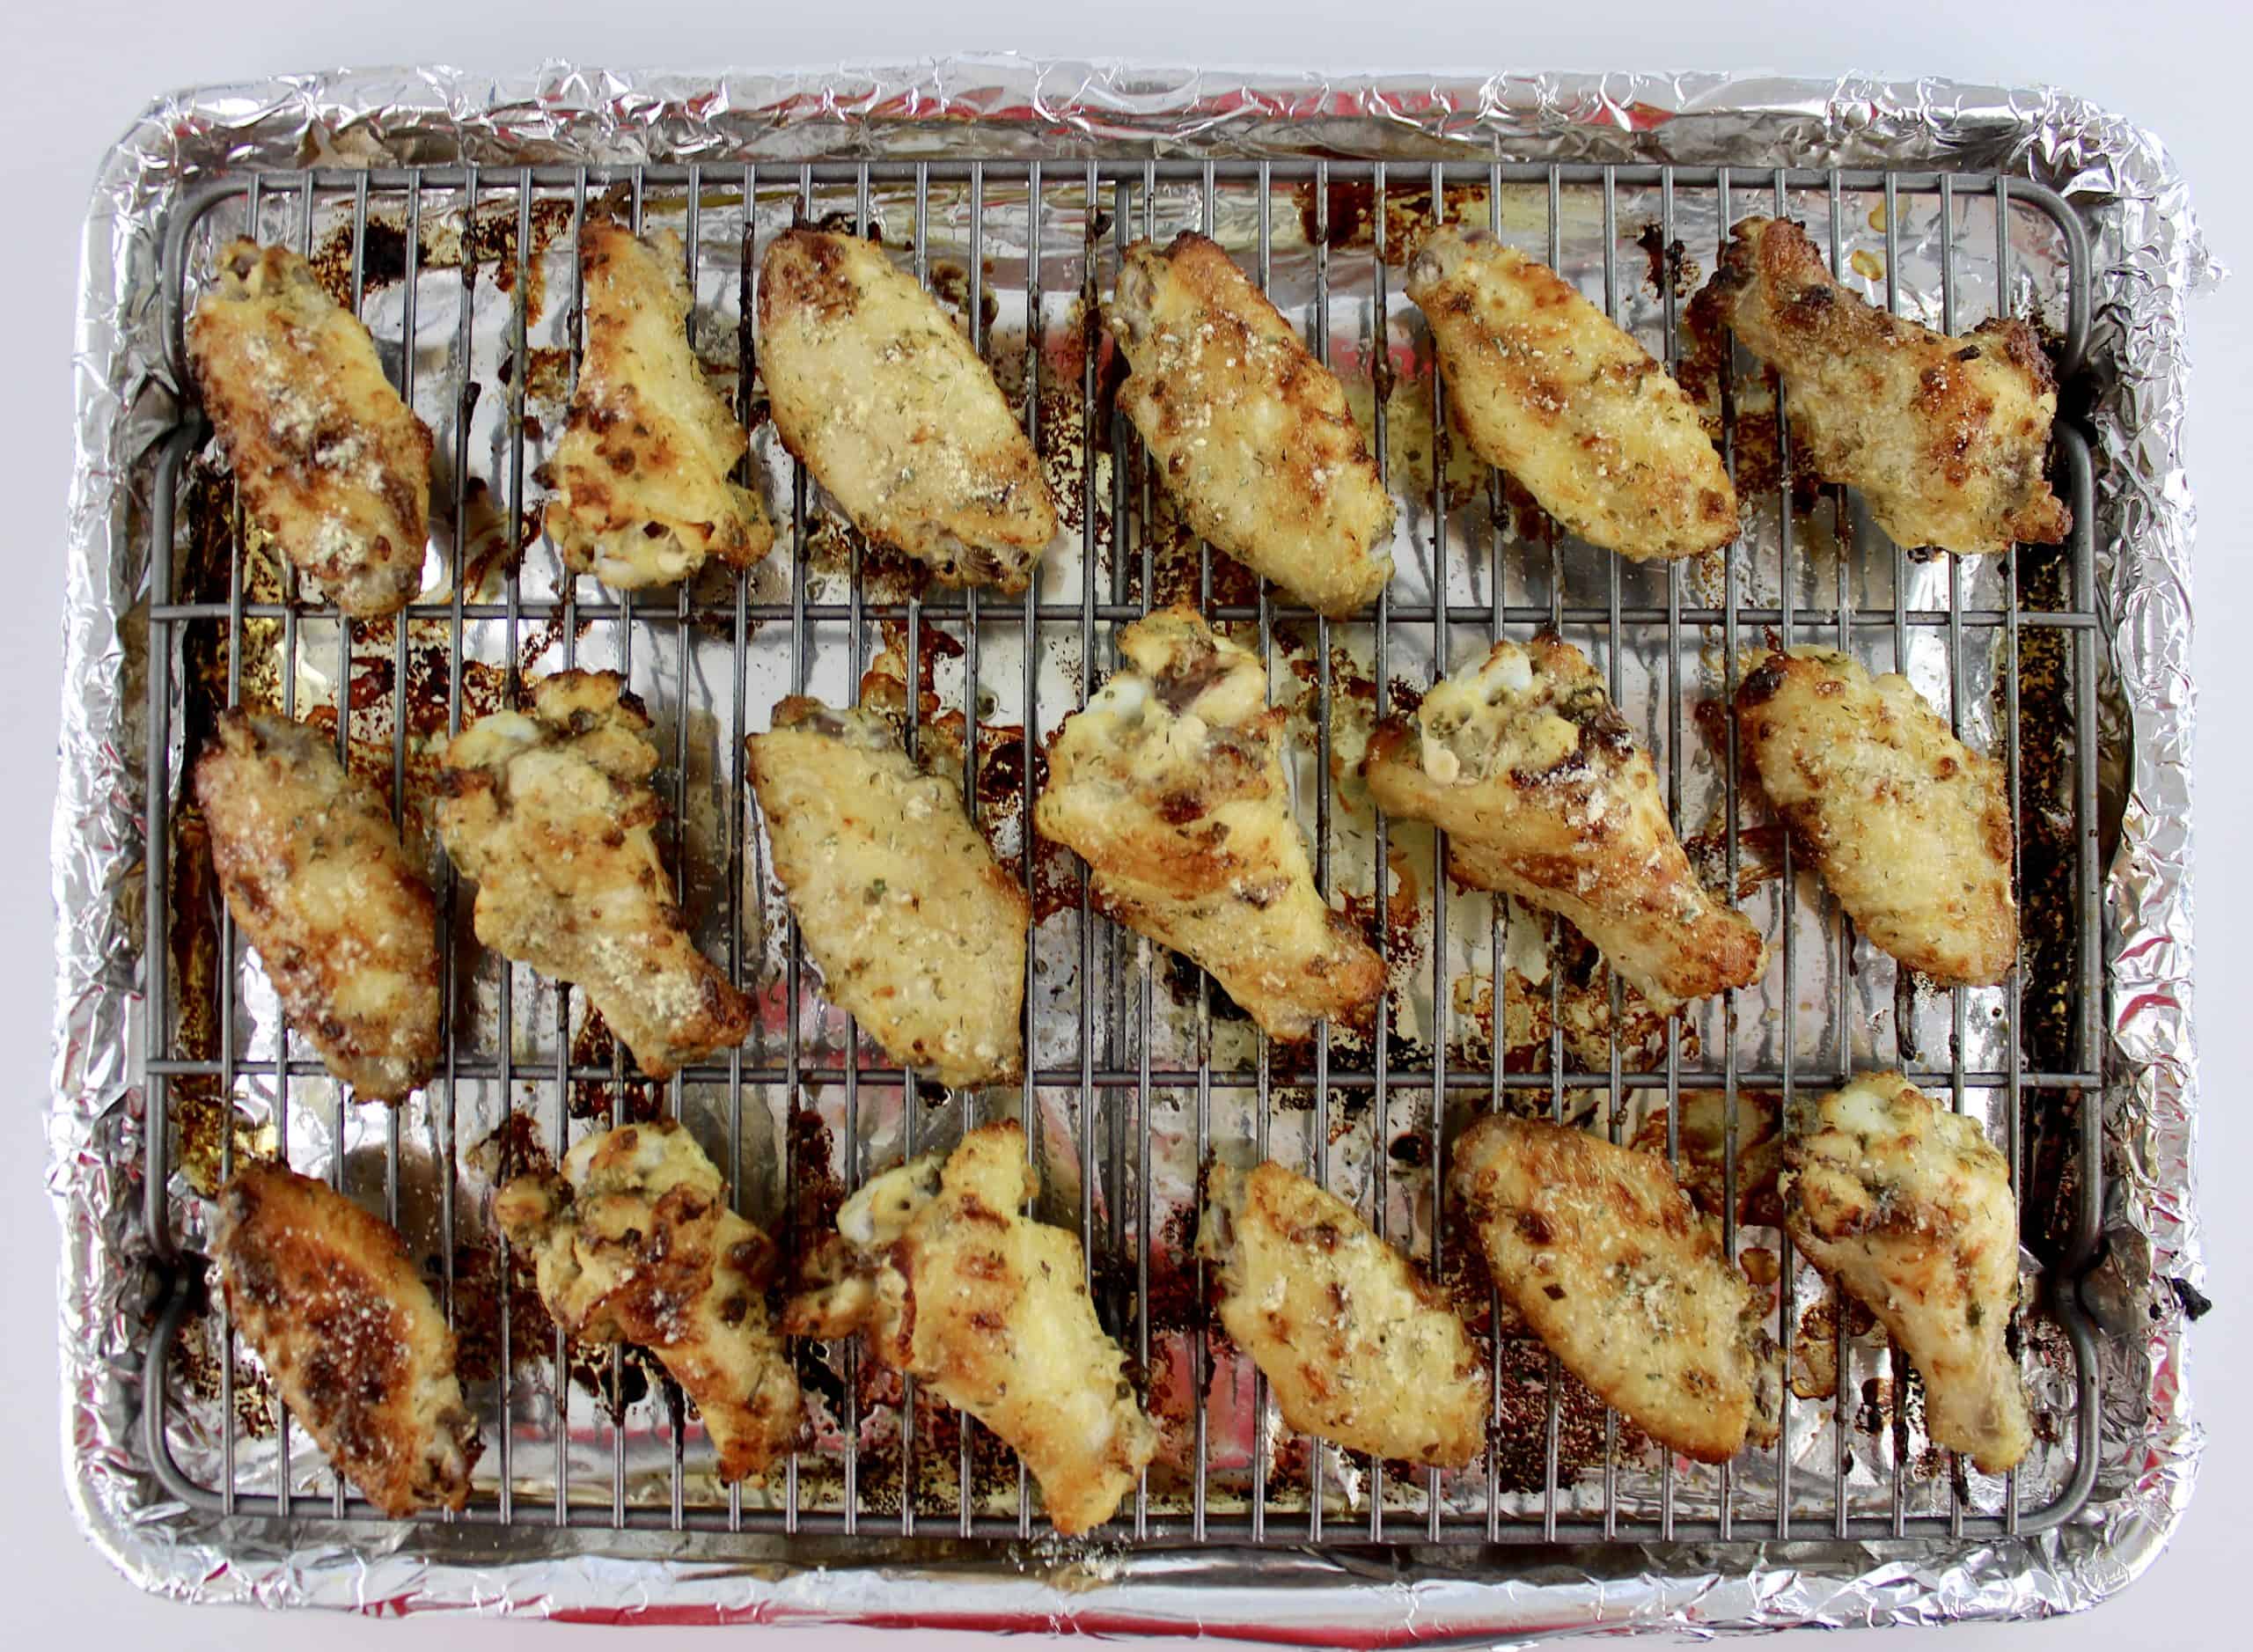 seasoned chicken wings on baking sheet with wire rack baked